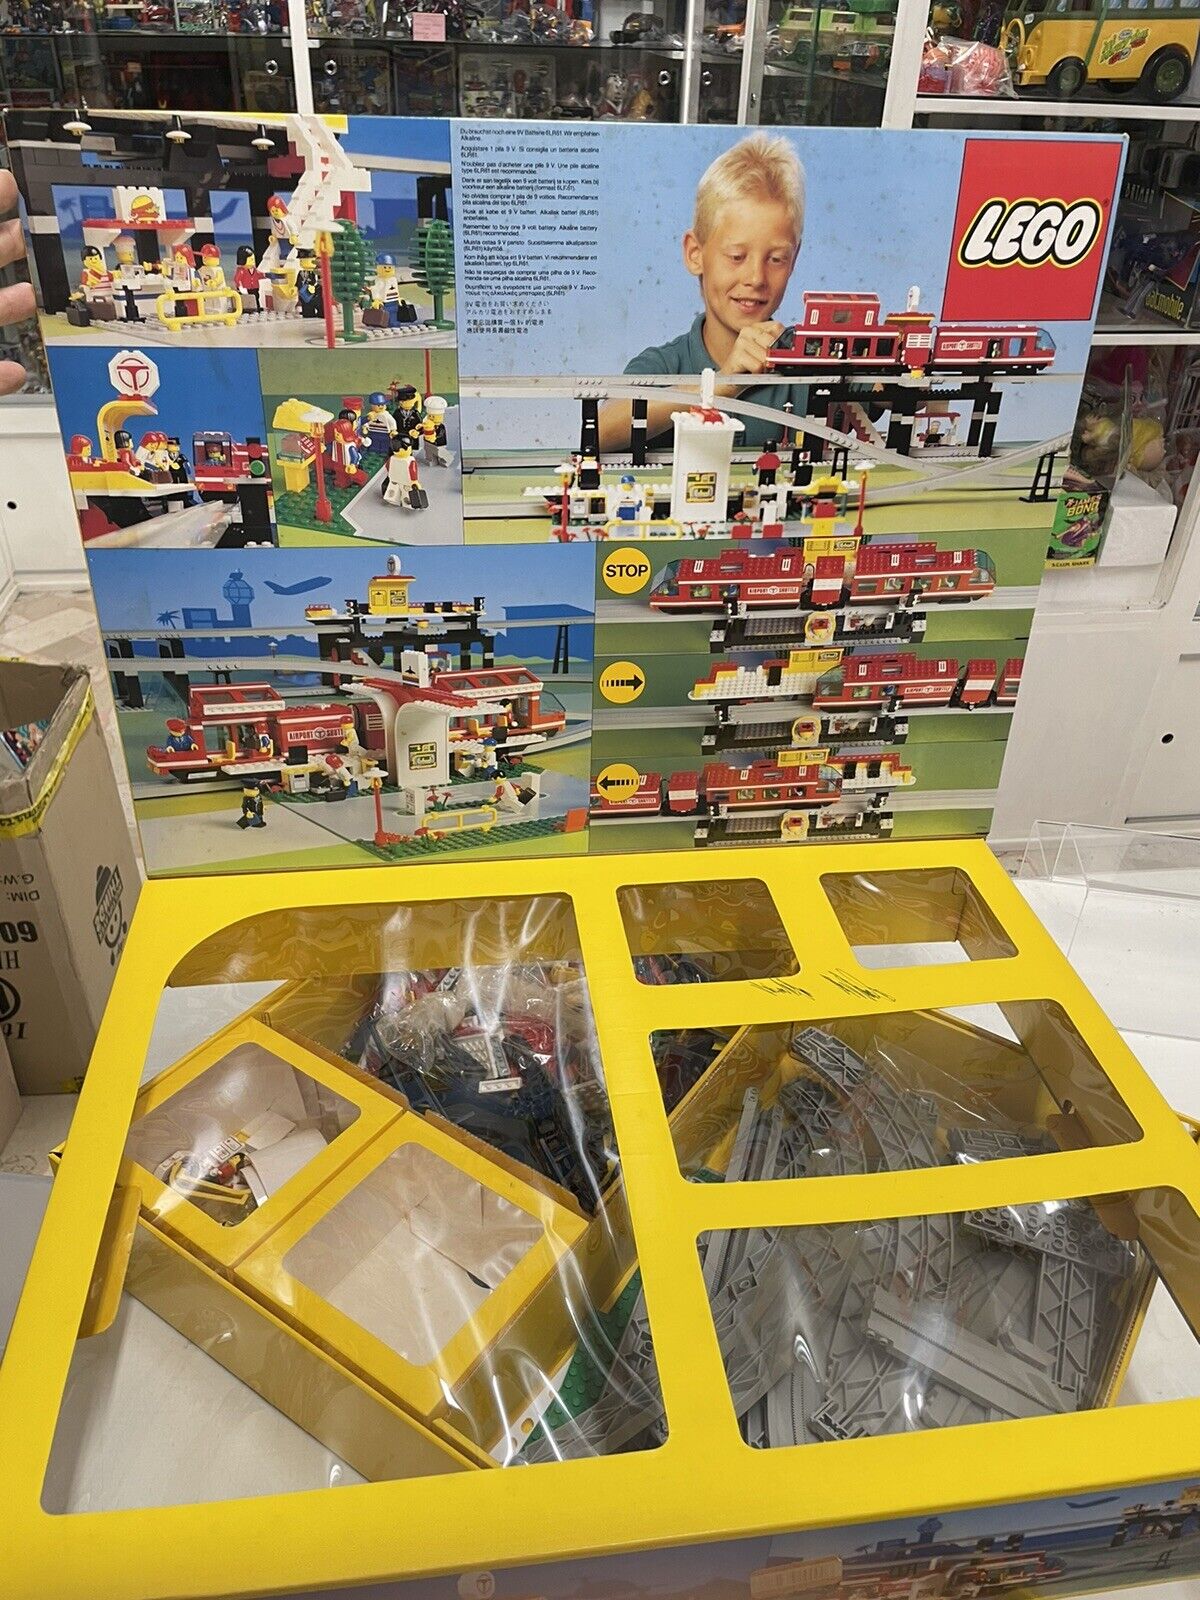 Lego-6399-Airport-Shuttle-9V-Legoland-City-Town-Monorail-1989-RARA-Box-PERFETTA-144648532031-2